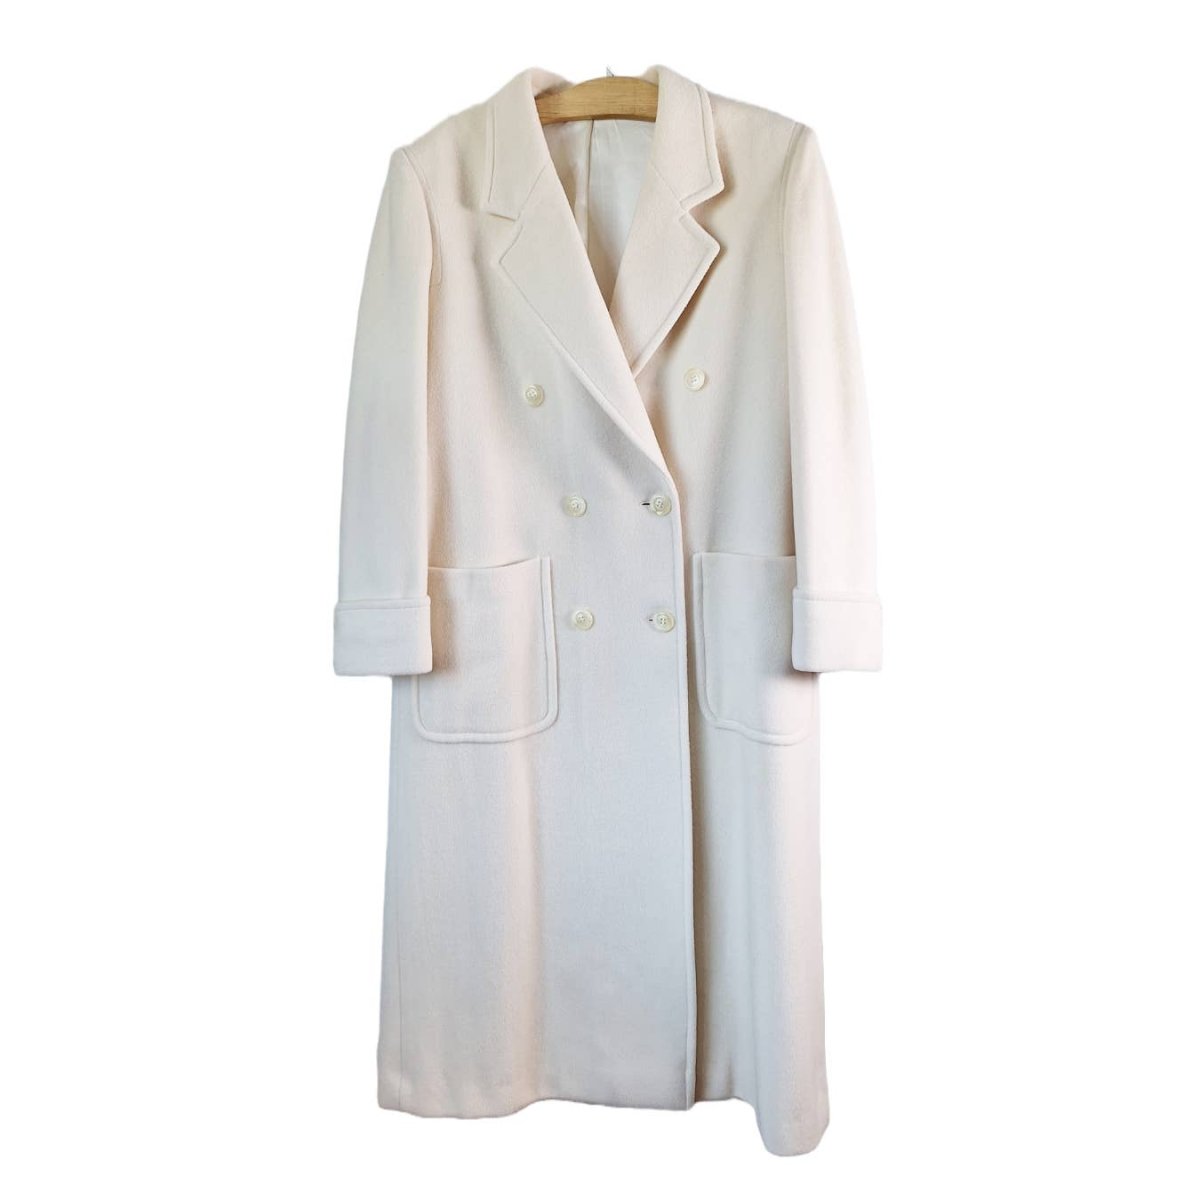 Vintage 80s/90s Cream Italian Wool/Cashmere Full Length Coat